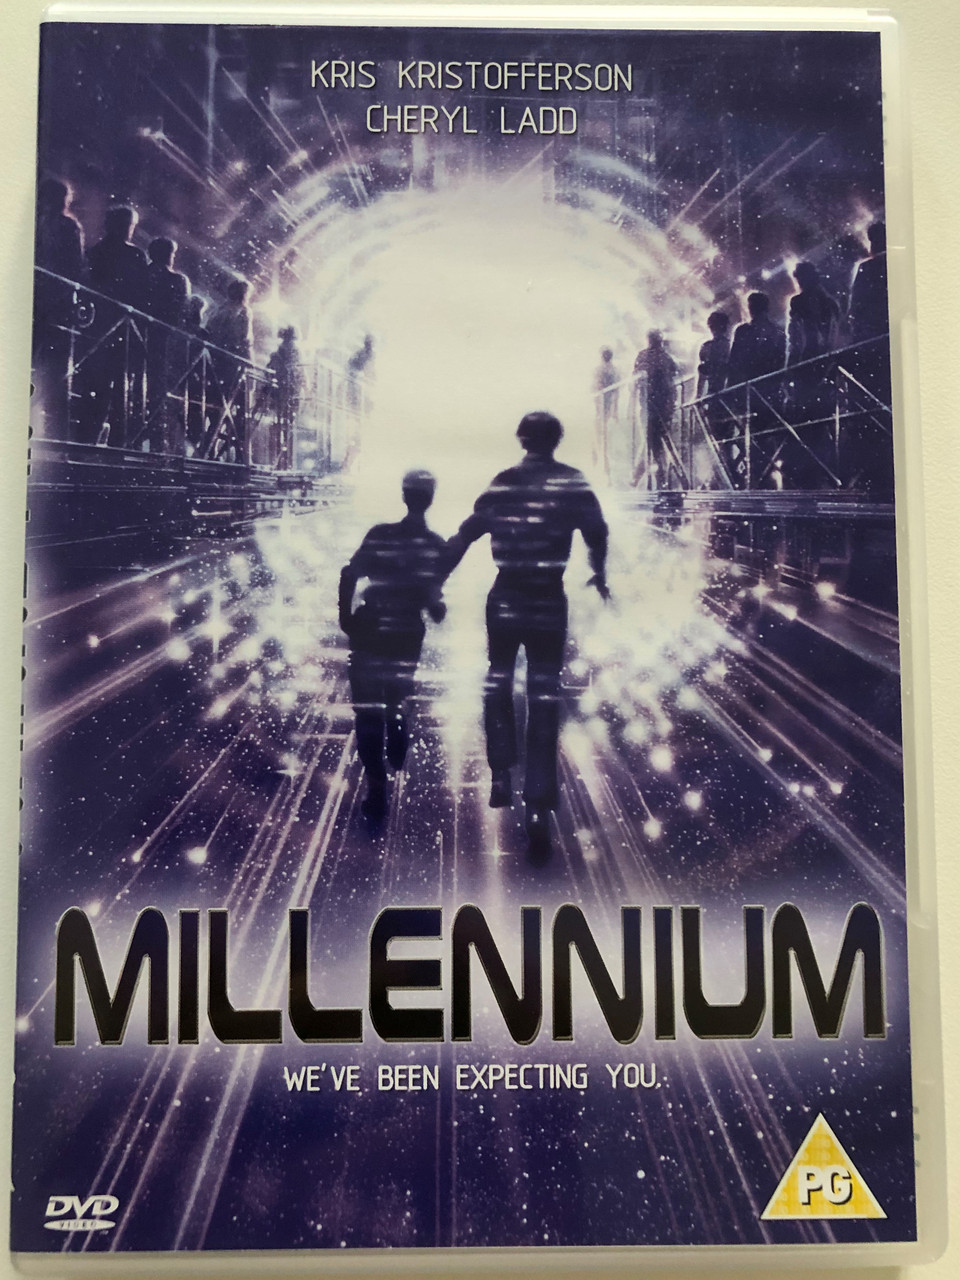 Millennium DVD 1989 / Directed by Michael Anderson / Starring: Kris  Kristofferson, Cheryl Ladd, Daniel J. Travanti - bibleinmylanguage